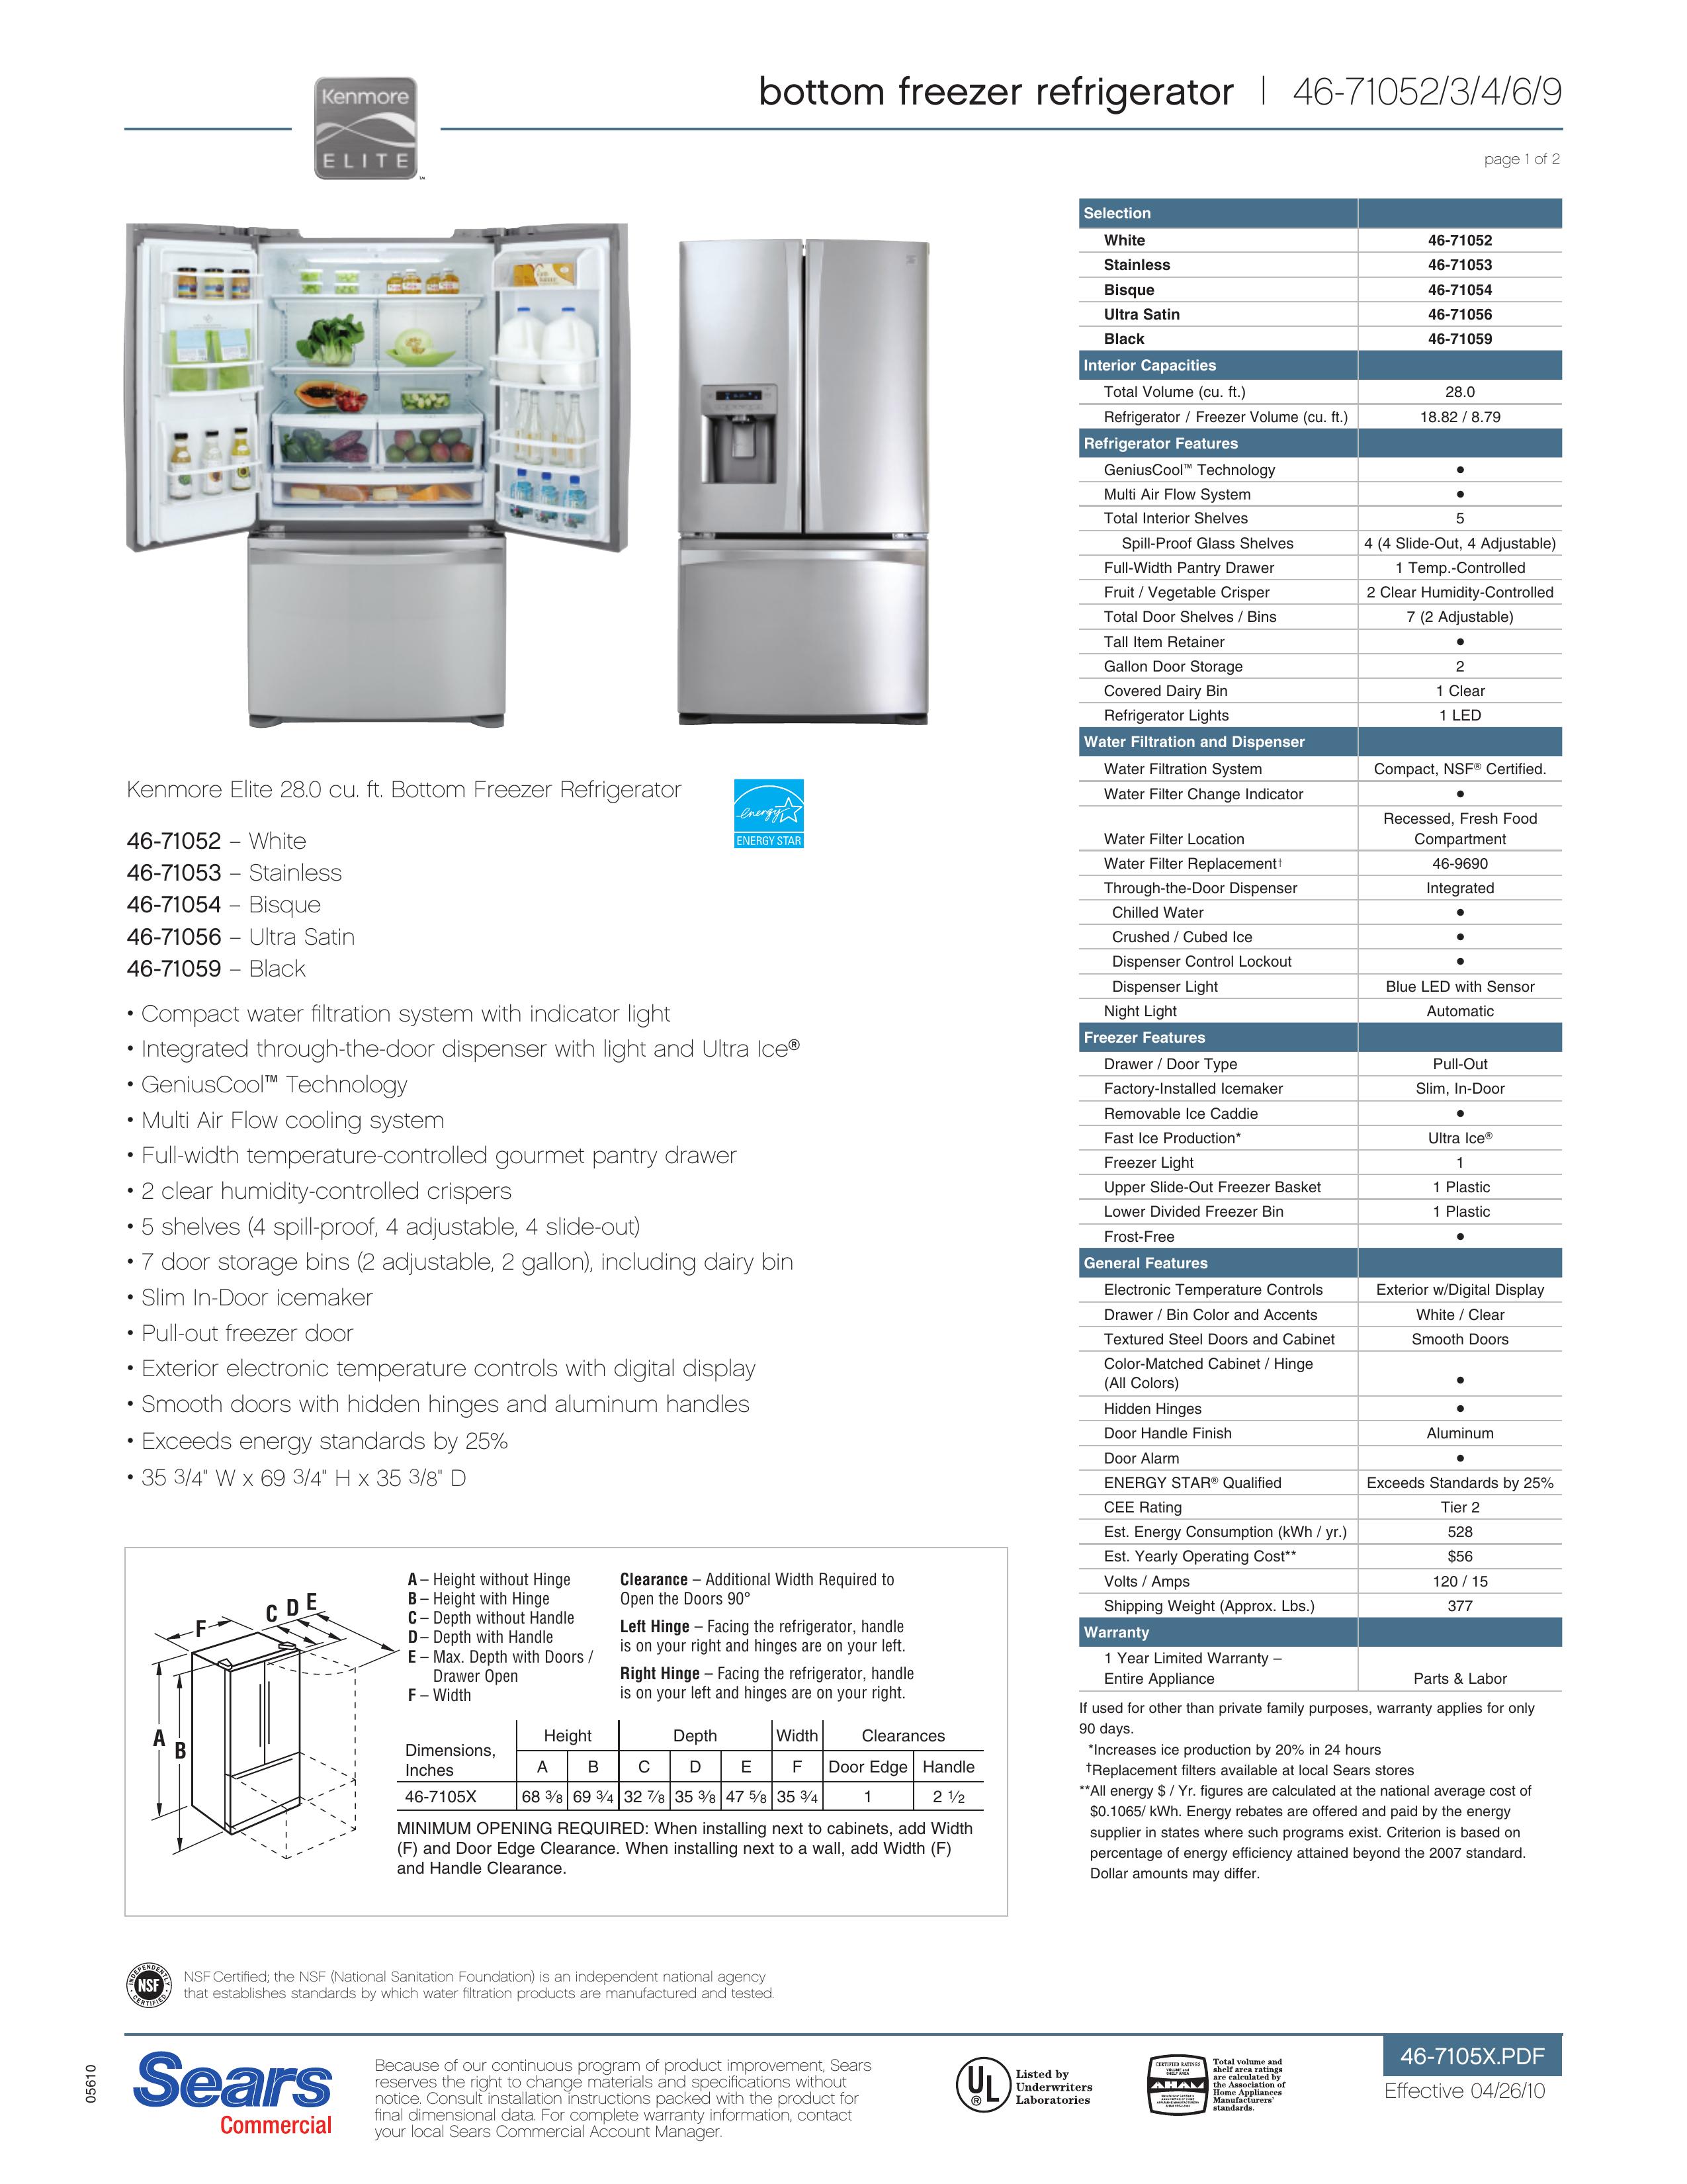 Sears 46-71054 Refrigerator User Manual